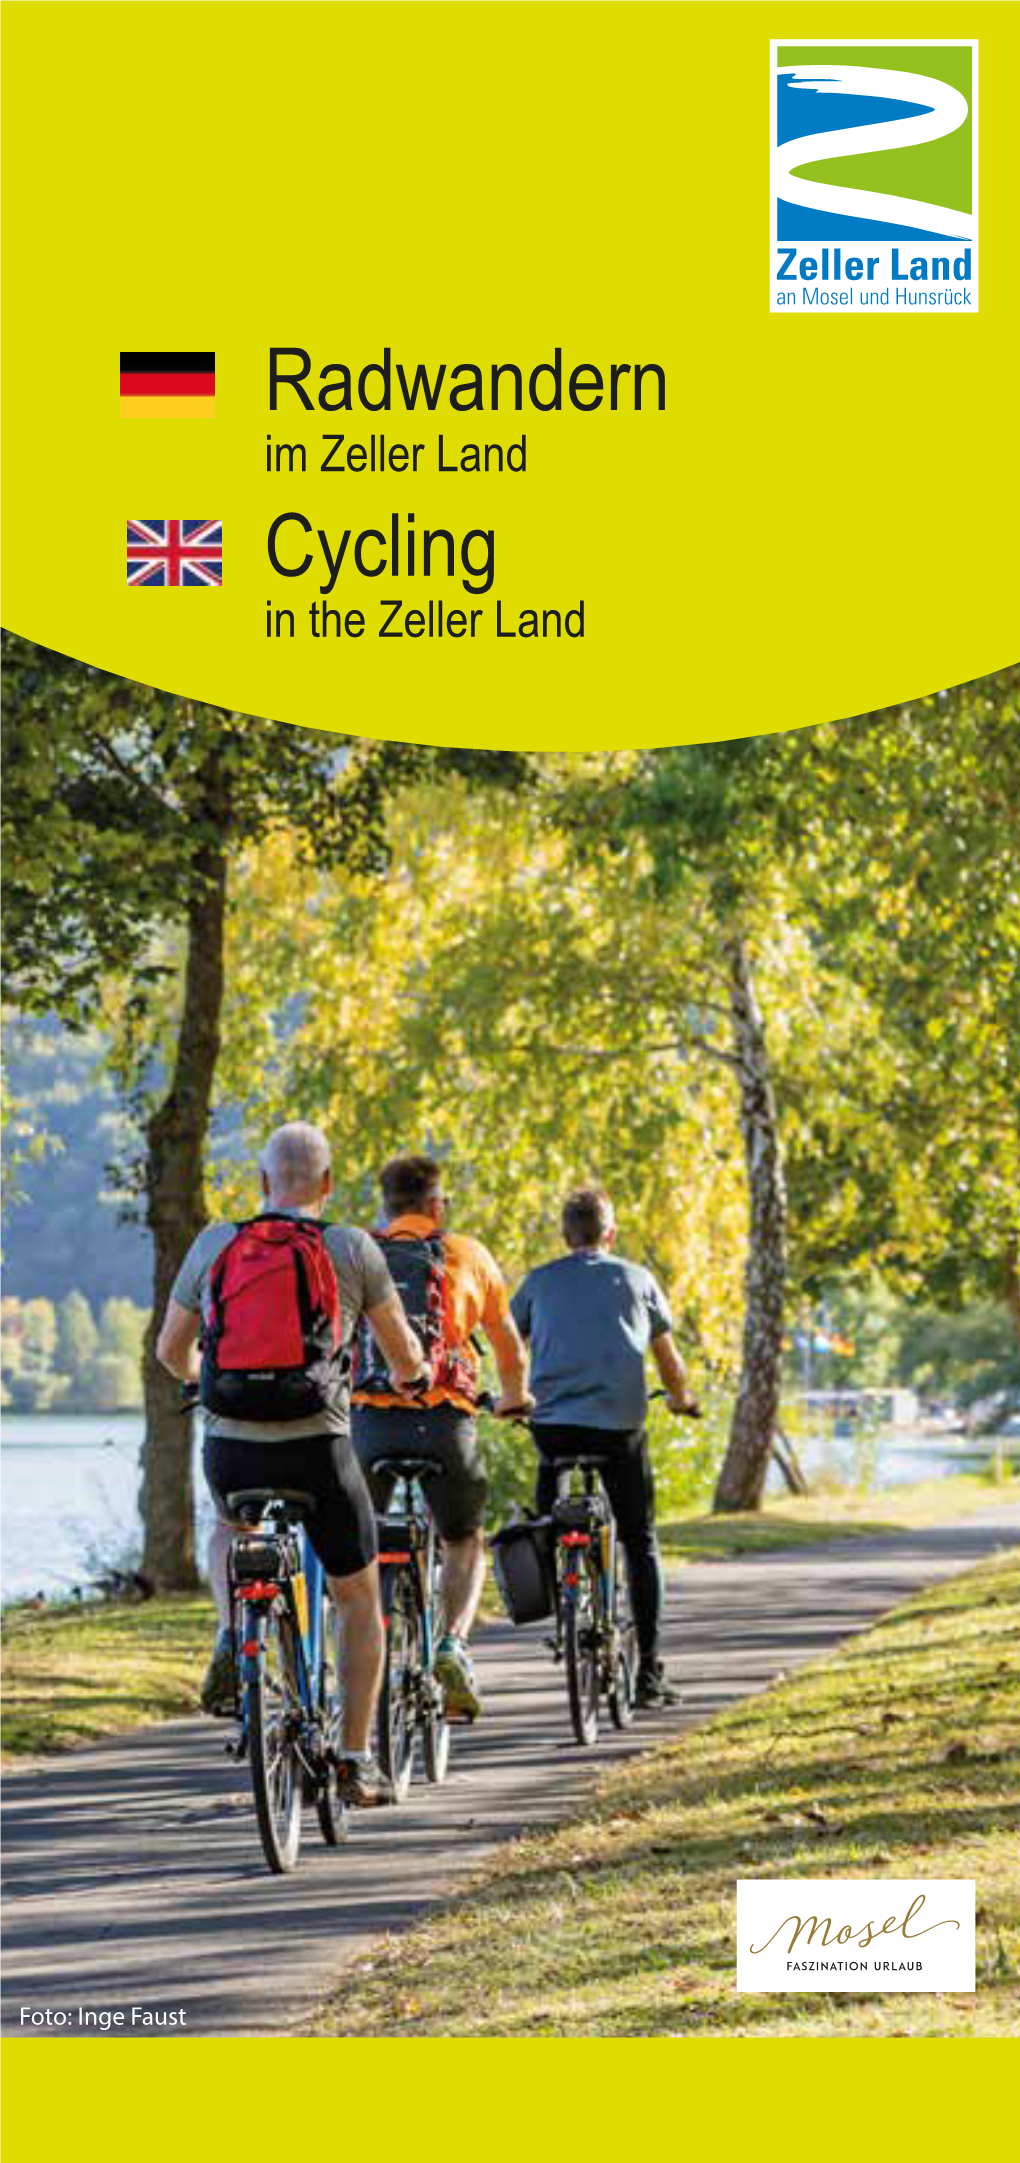 Radwander Broschüre DE EN 2021 Klein